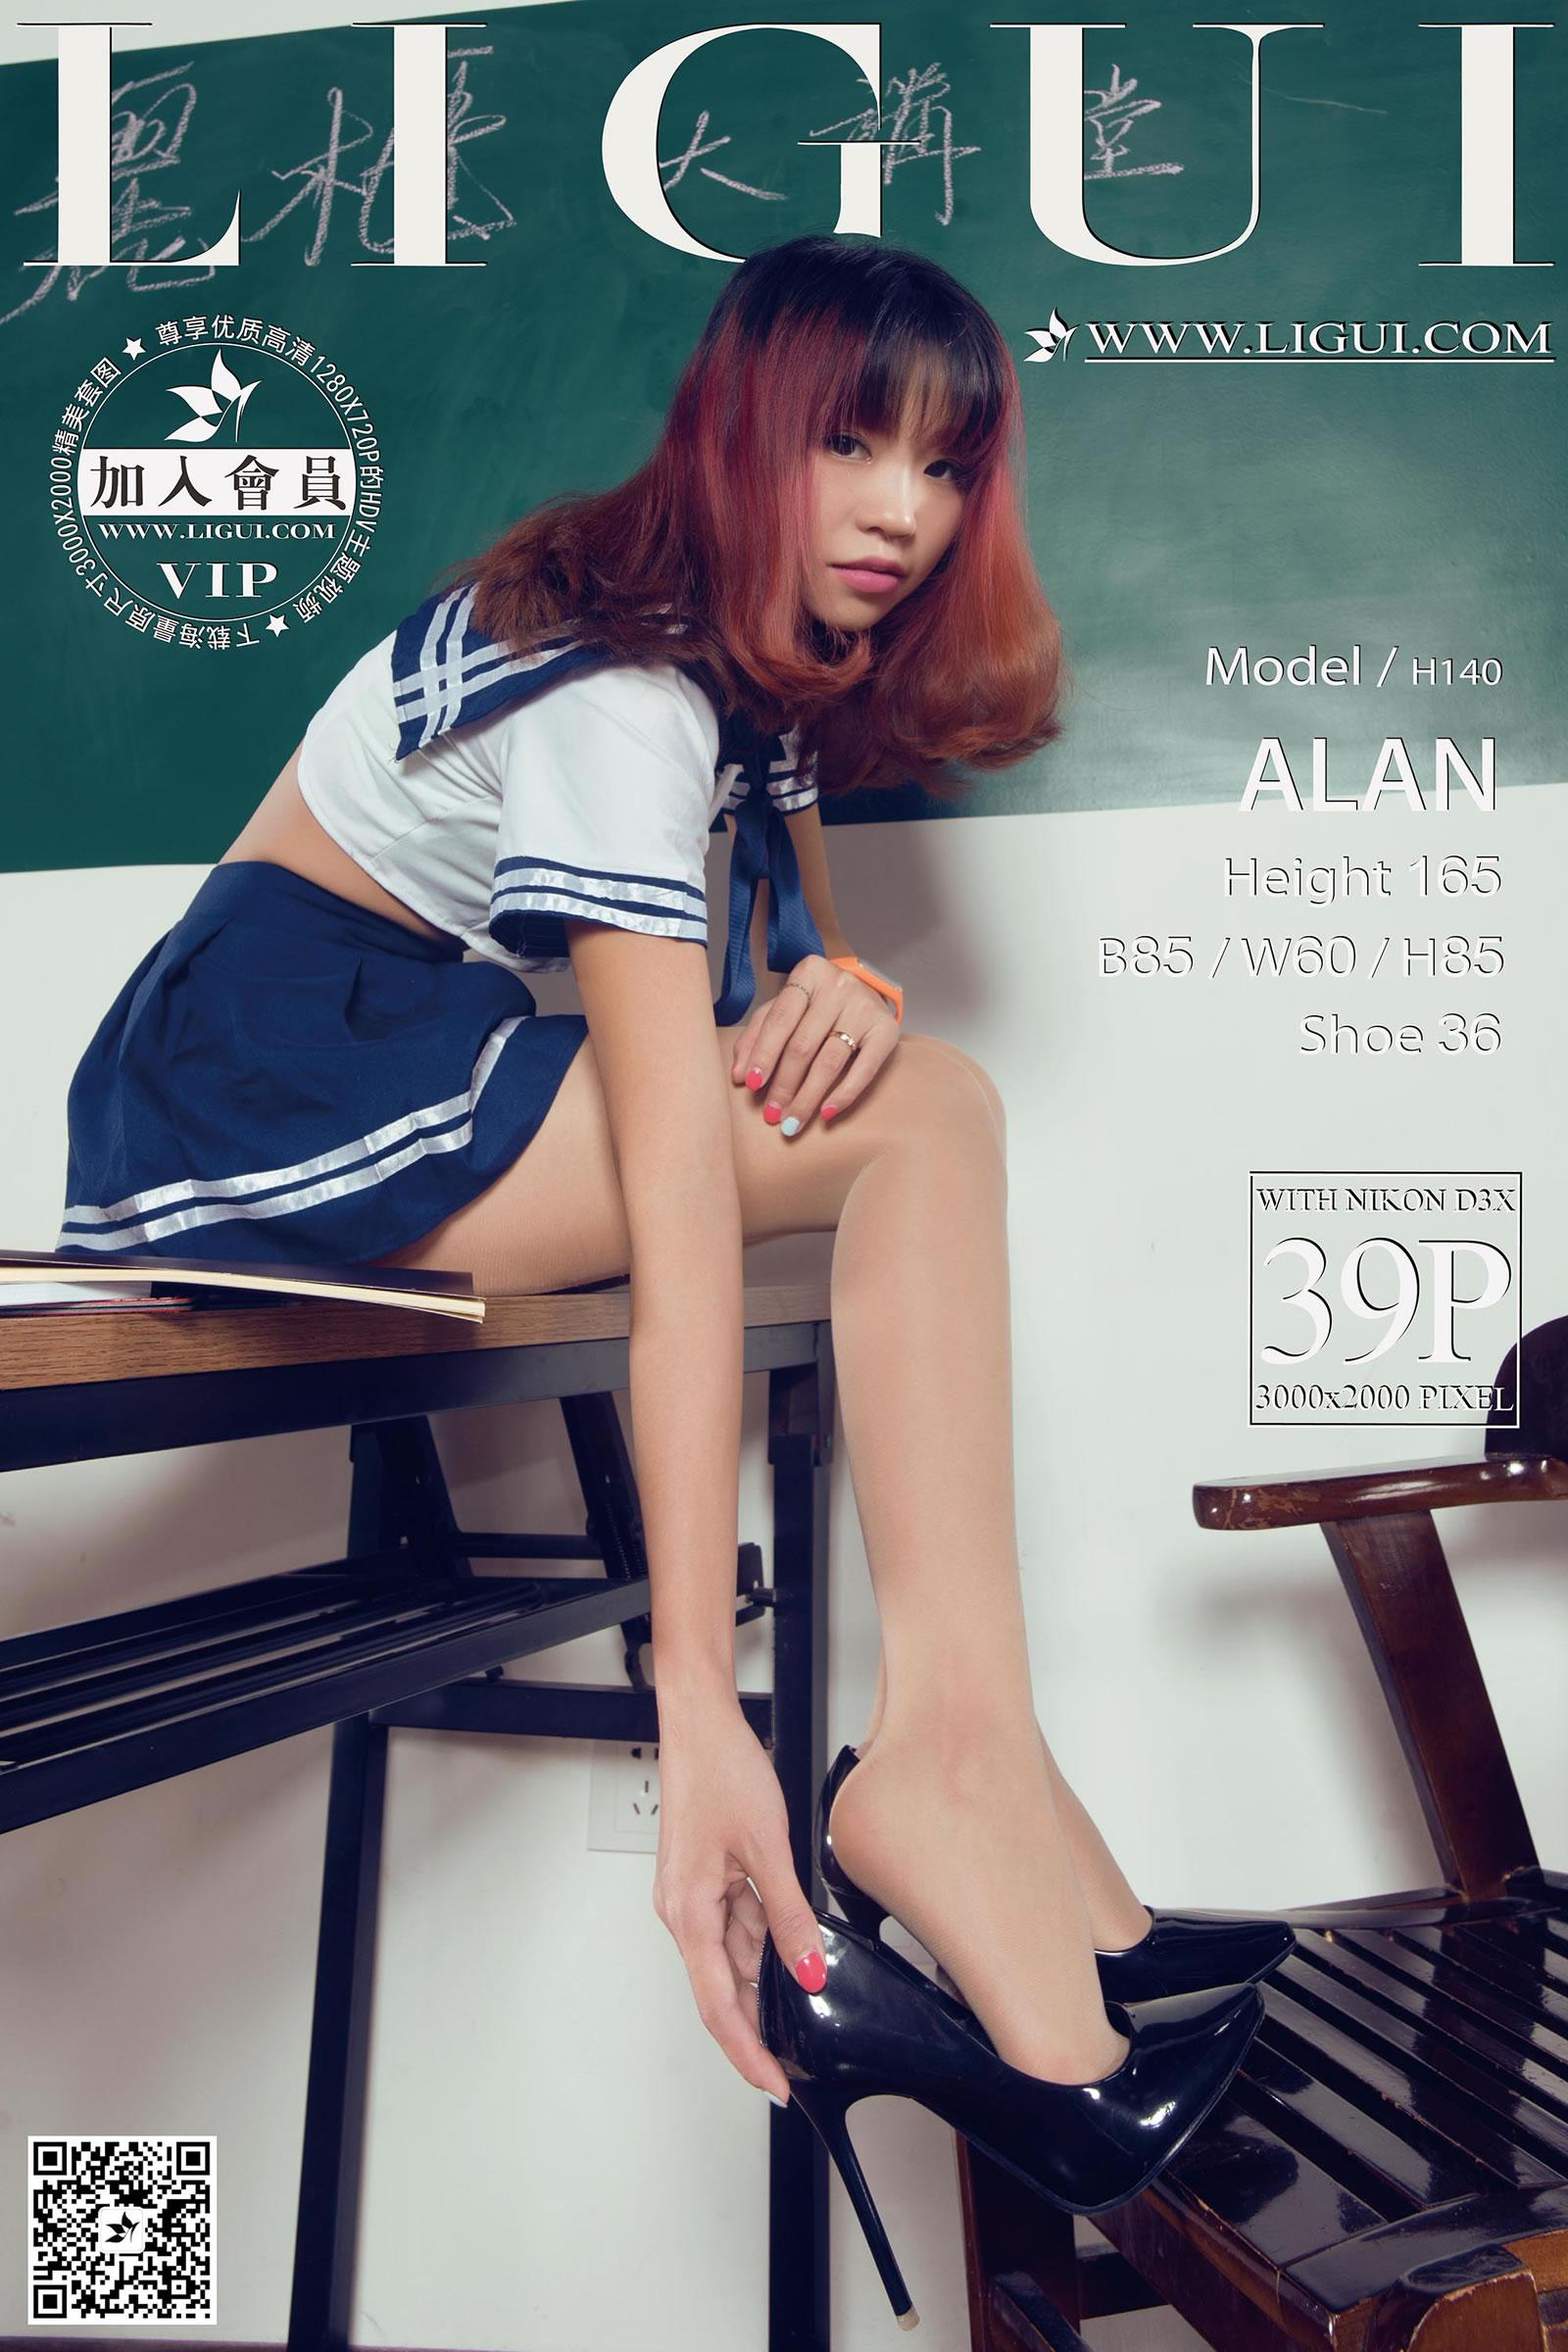 丽柜 Model ALAN 学生水手服肉丝美腿写真,丽柜 Model ALAN 学生水手服肉丝美腿写真